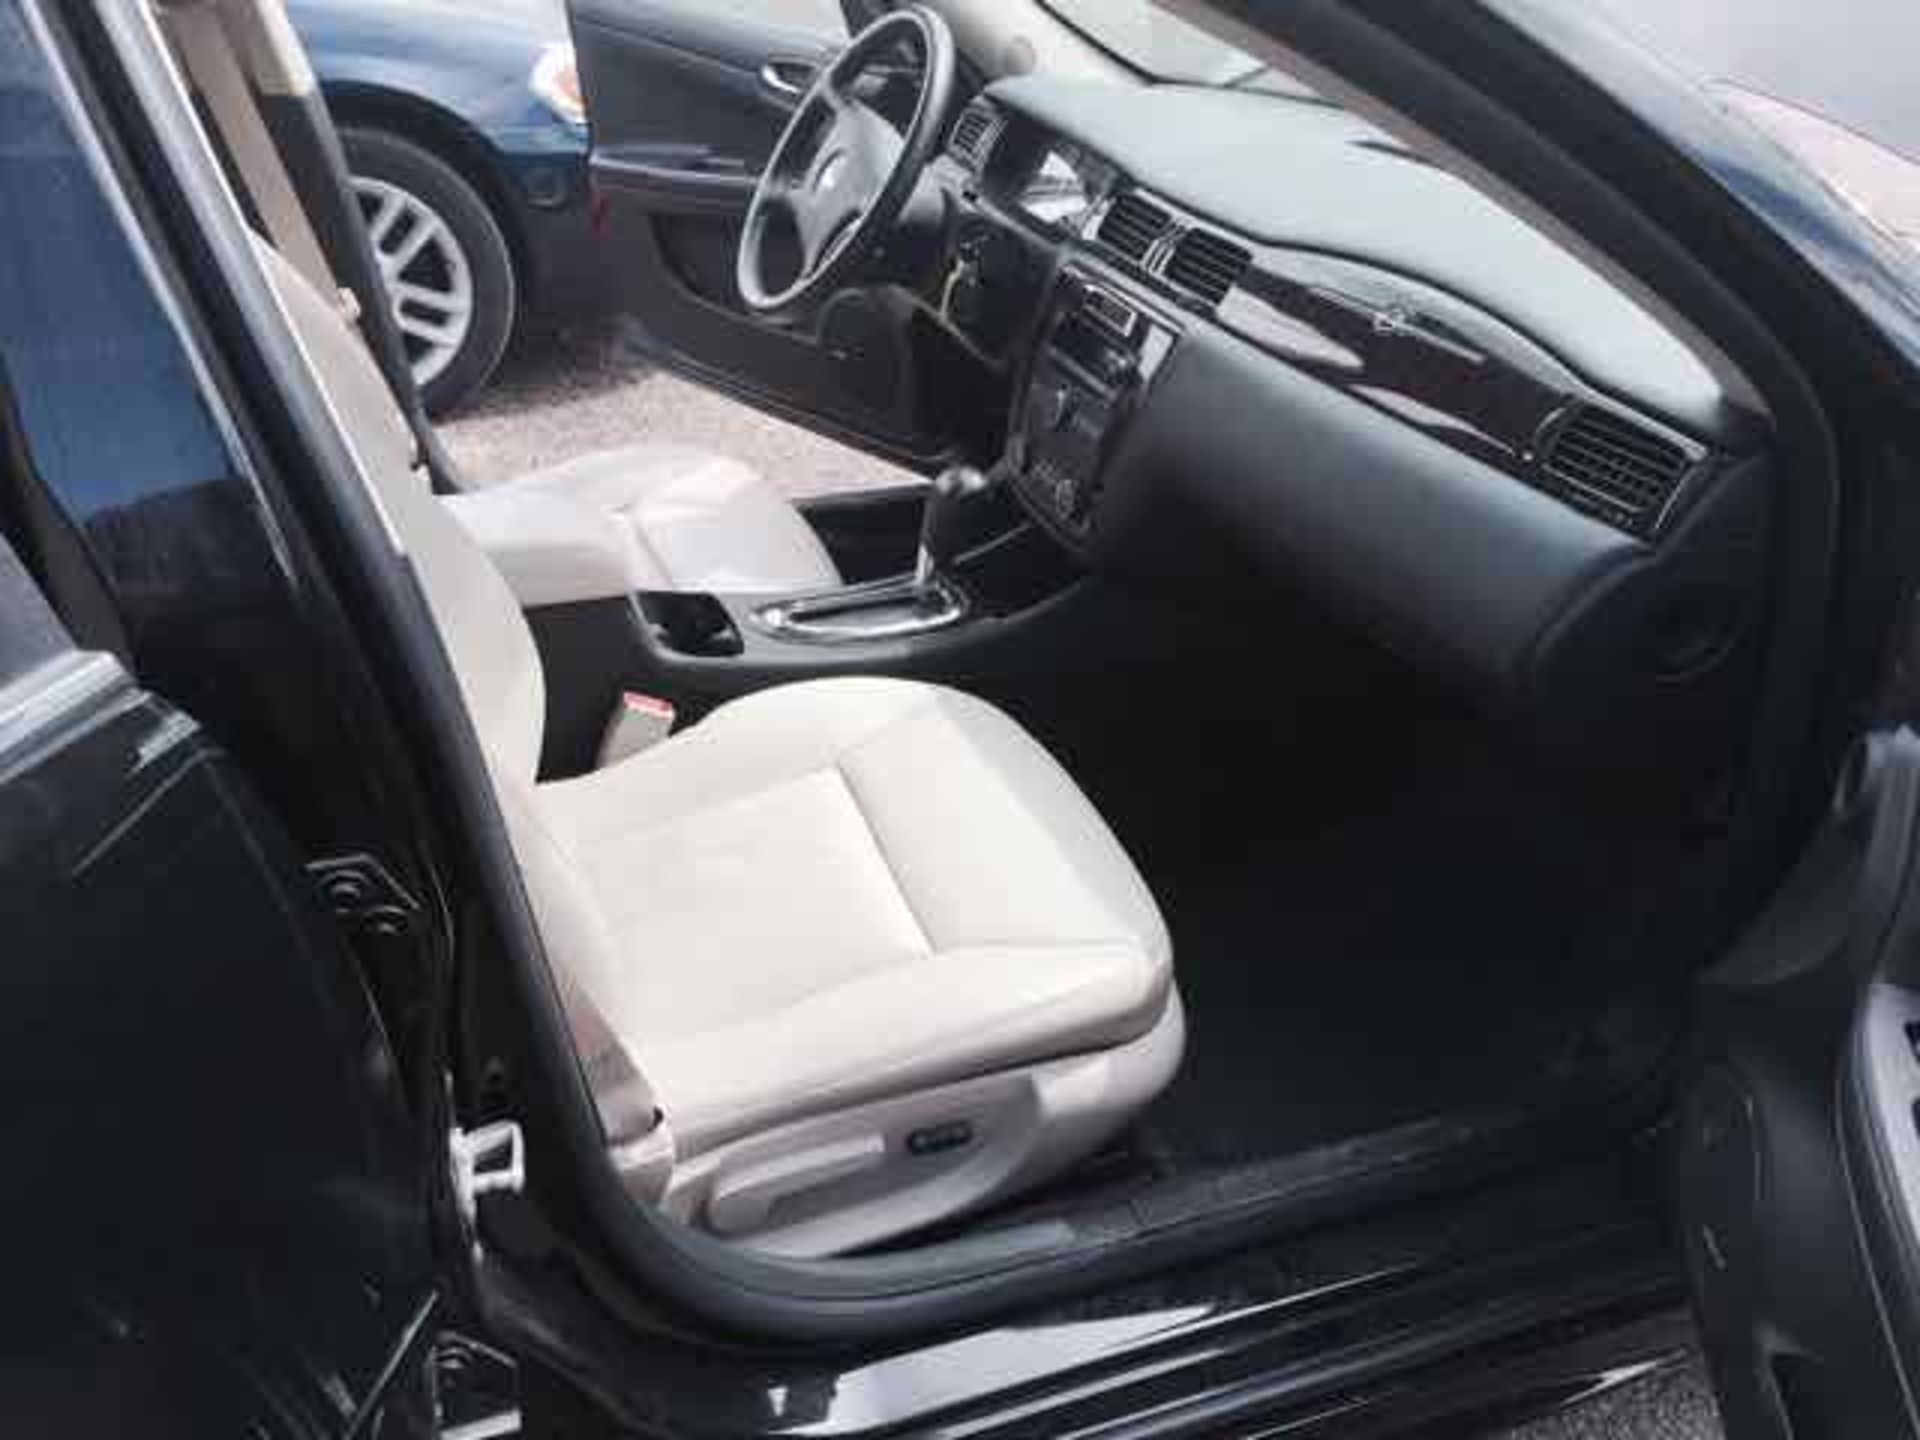 2012 Chevrolet Impala LTZ, VIN 2G1WC5E31C1308572, 4,710 lb. GVWR, 4-door, sunroof, black in color, - Image 10 of 12